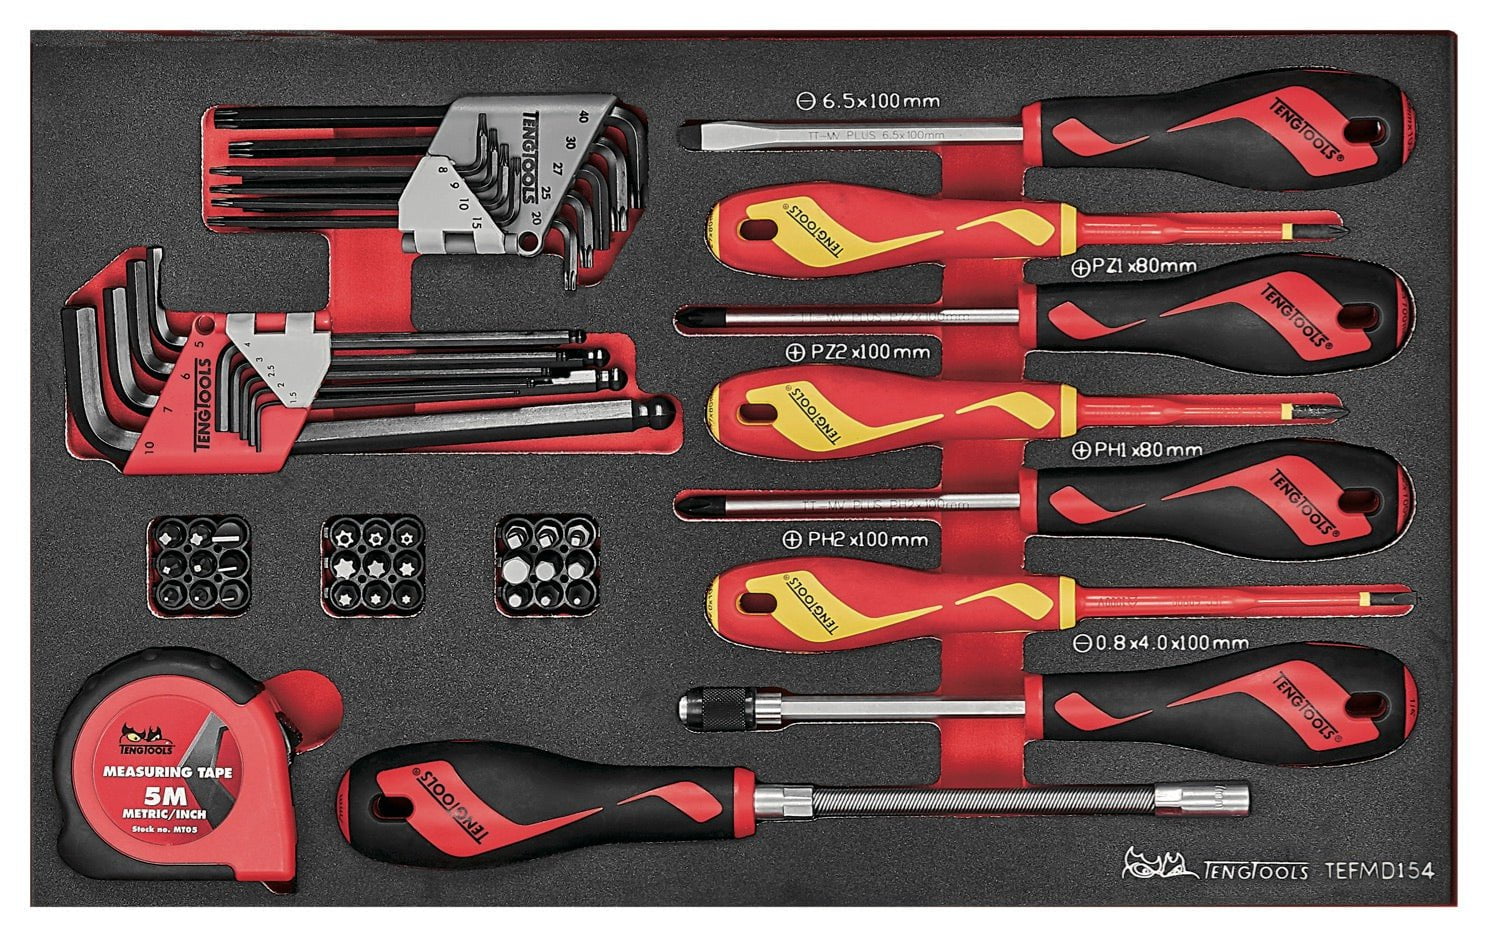 Teng Tools 118 Piece Screwdriver, Plier, Hammer, Socketry & Wrench Service Case Foam Organization Tool Kit - SCE1